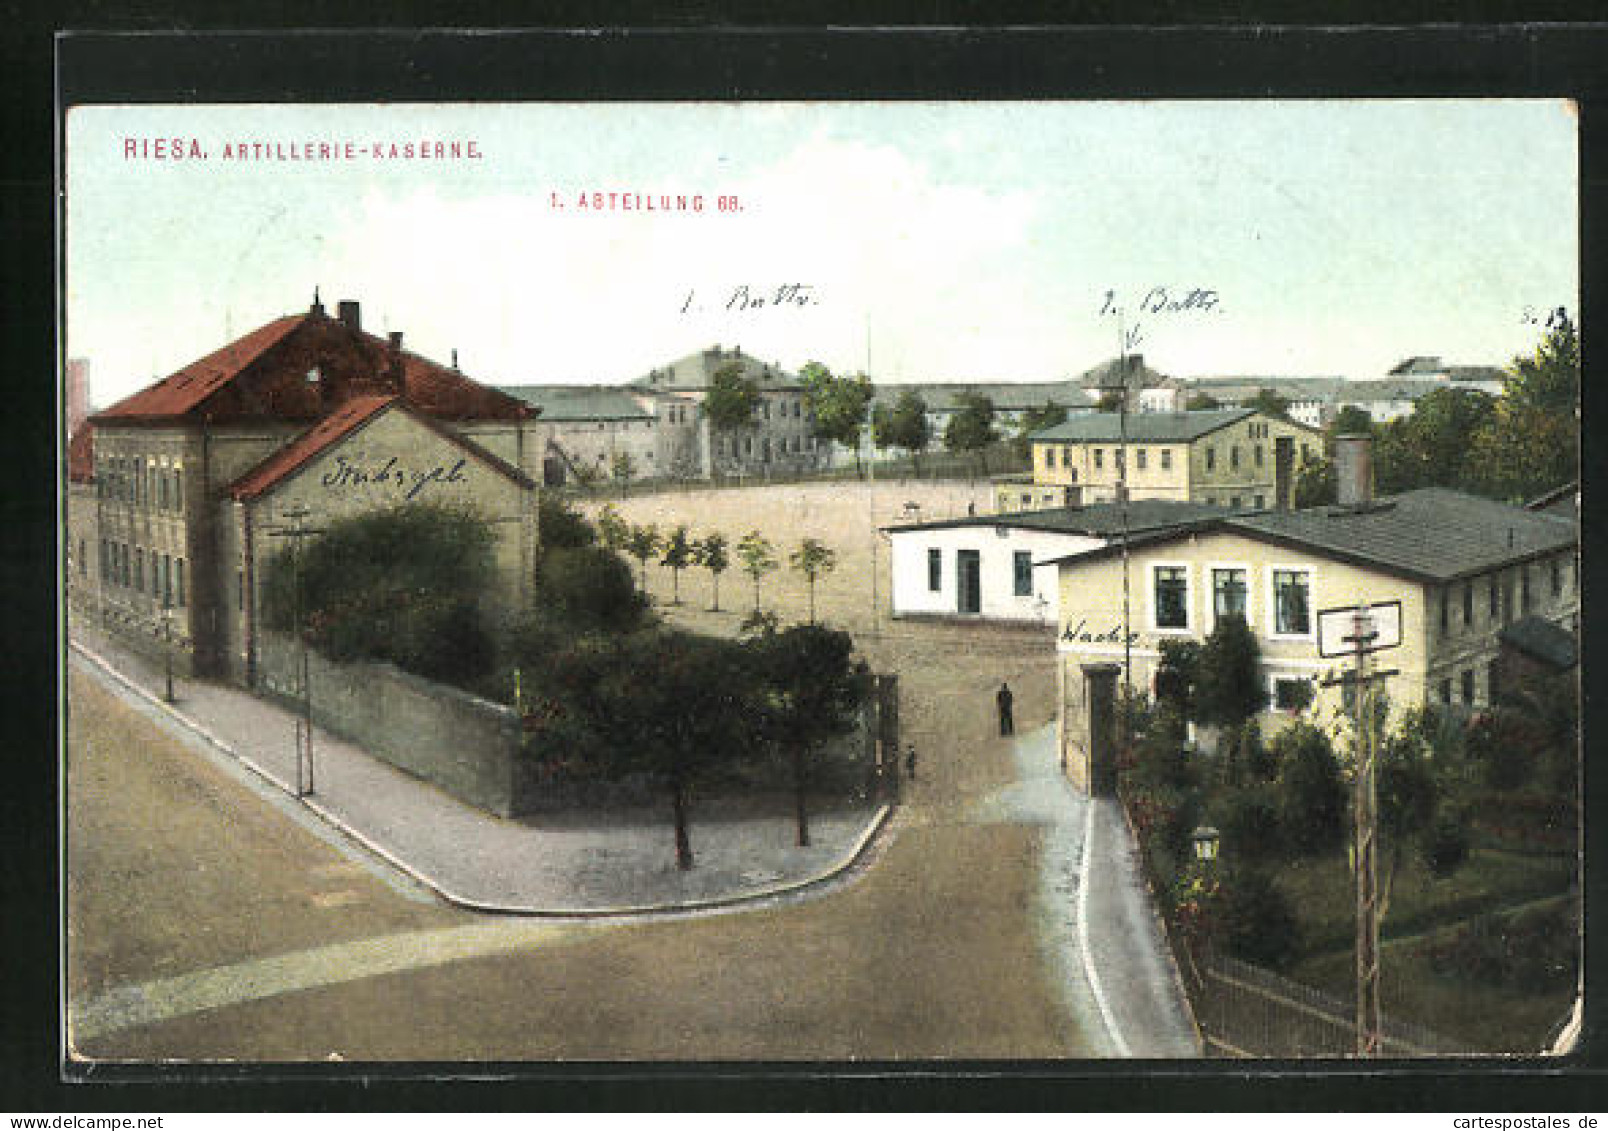 AK Riesa, Artillerie-Kaserne, 1. Abteilung 68  - Riesa